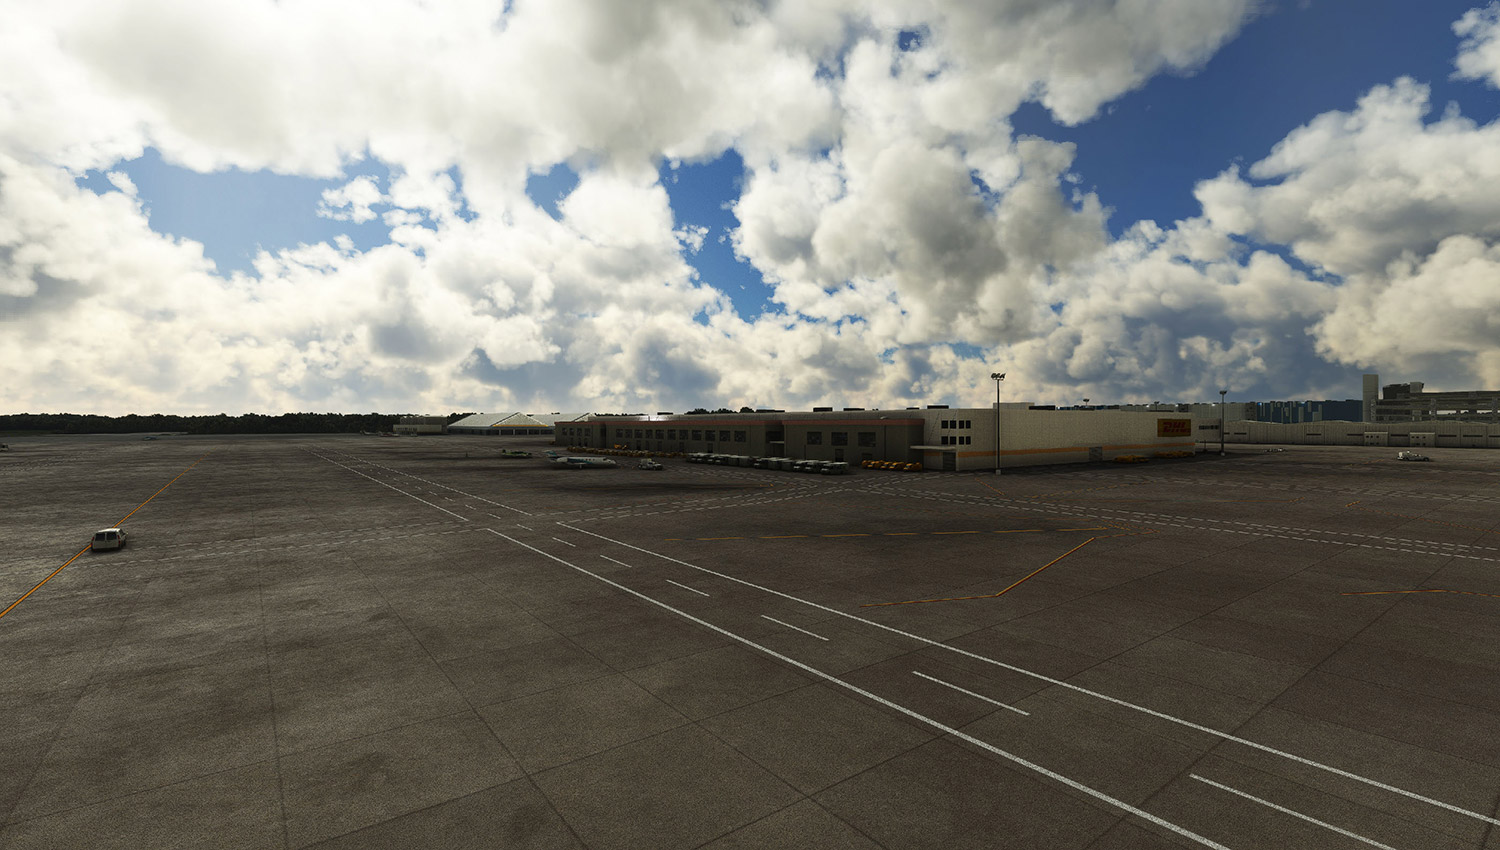 Skyline Simulations - KCVG - Cincinnati International Airport MSFS